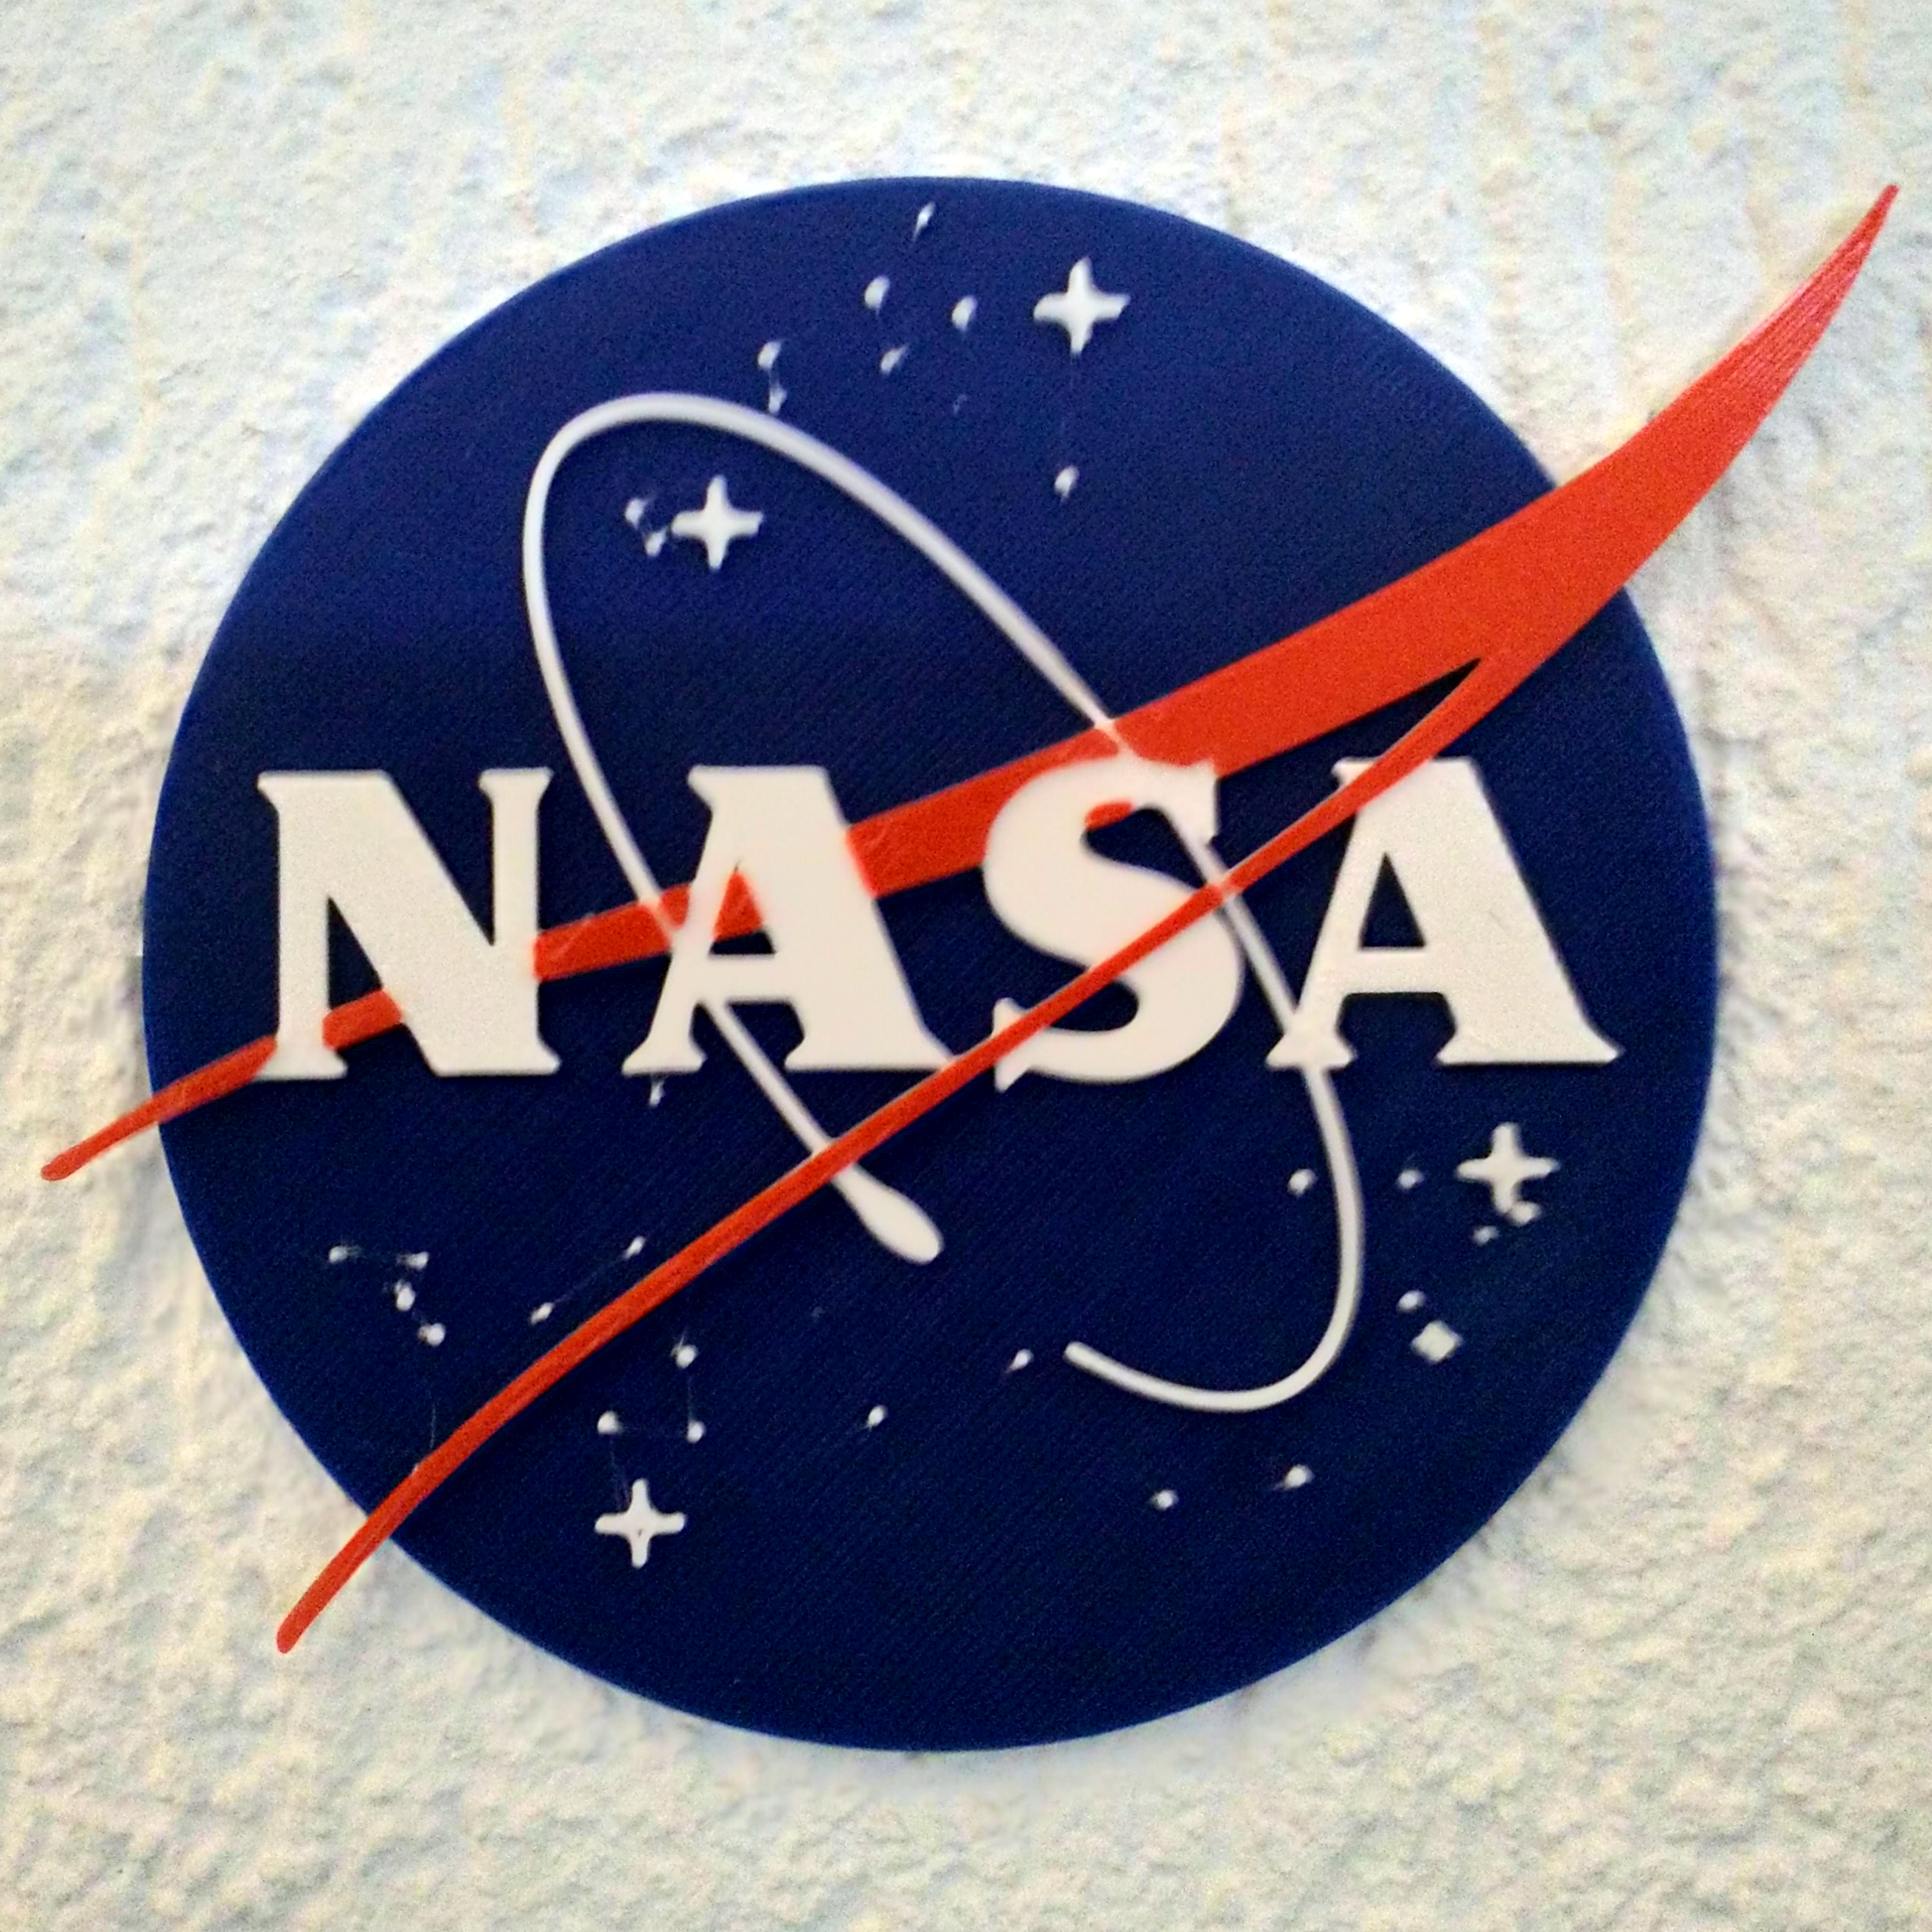 Nasa Logo Plate